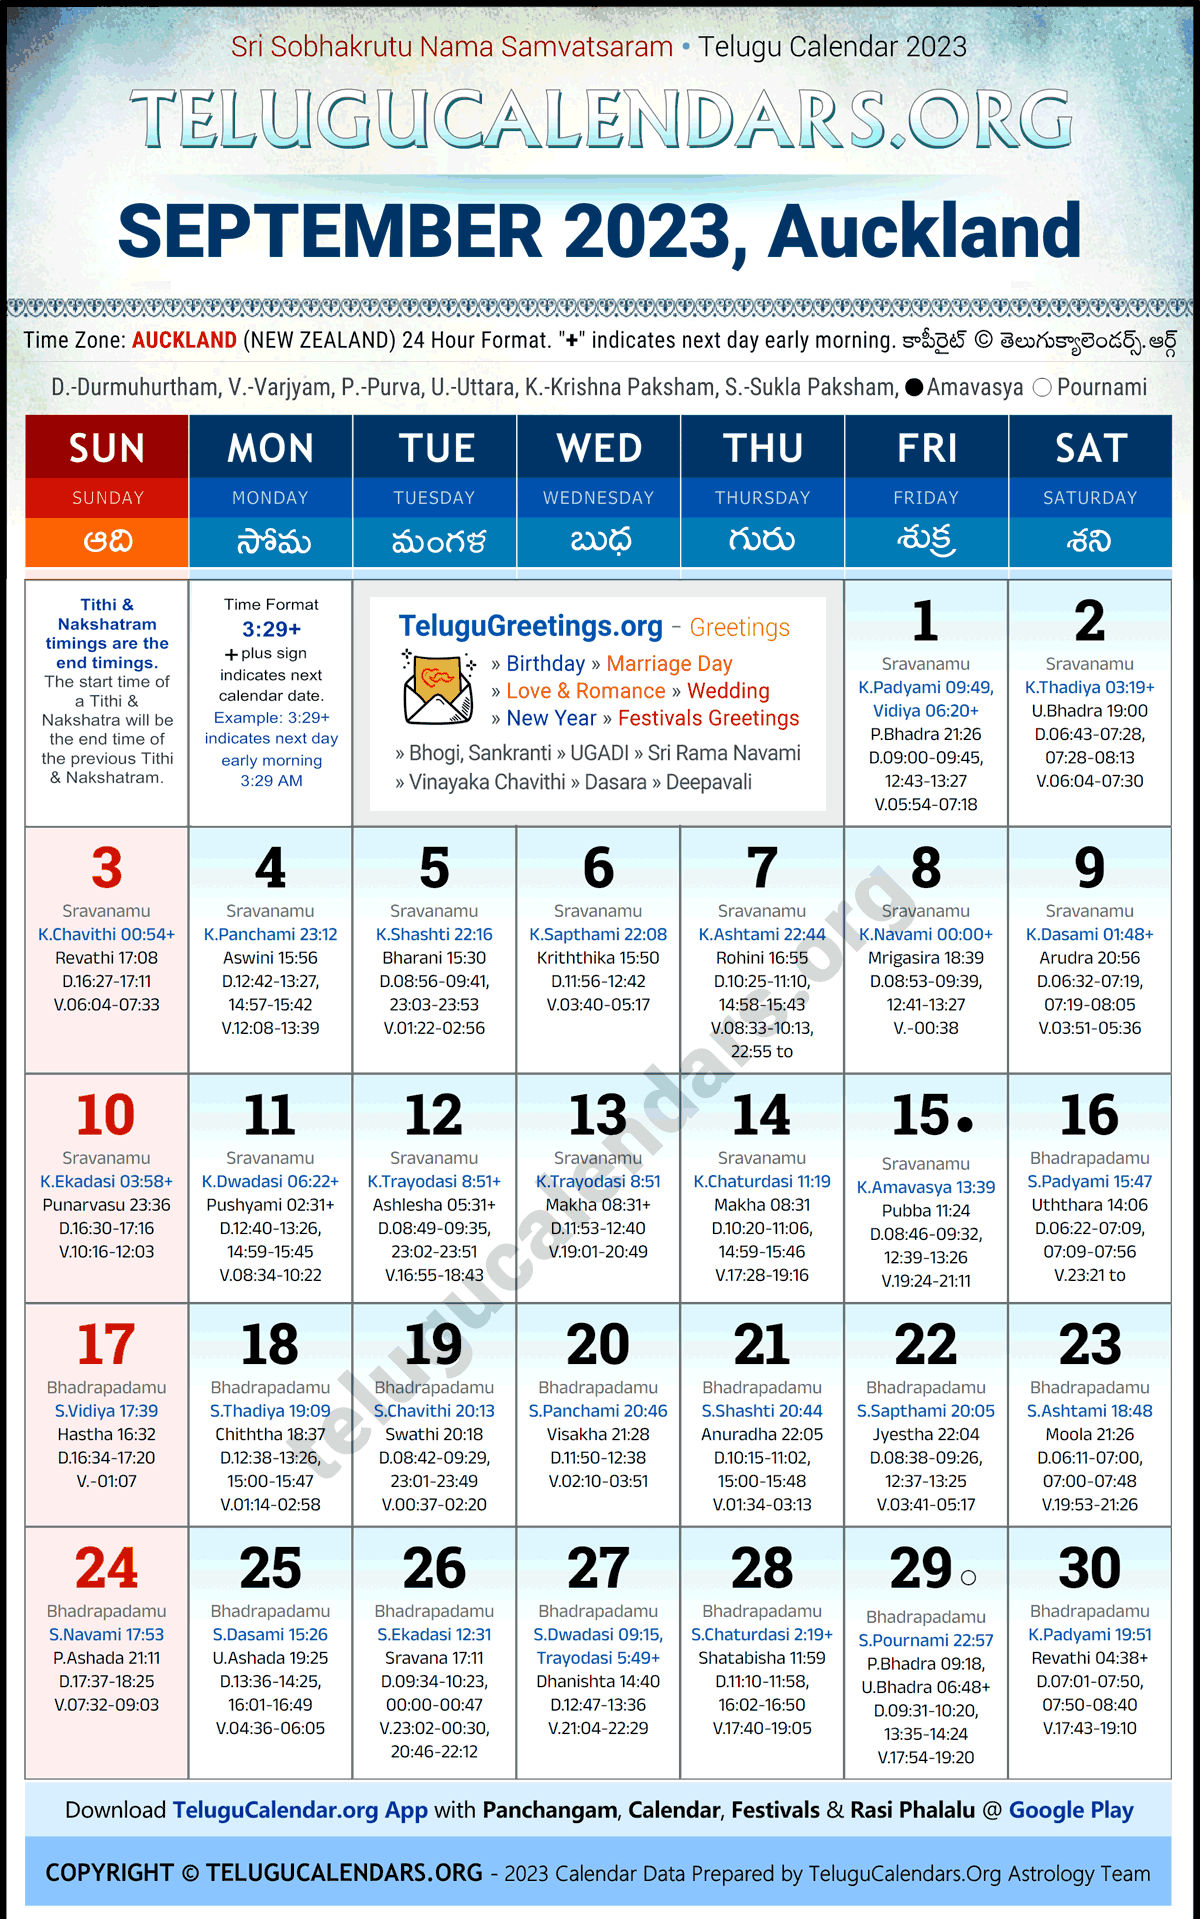 Telugu Calendar 2023 September Festivals for Auckland